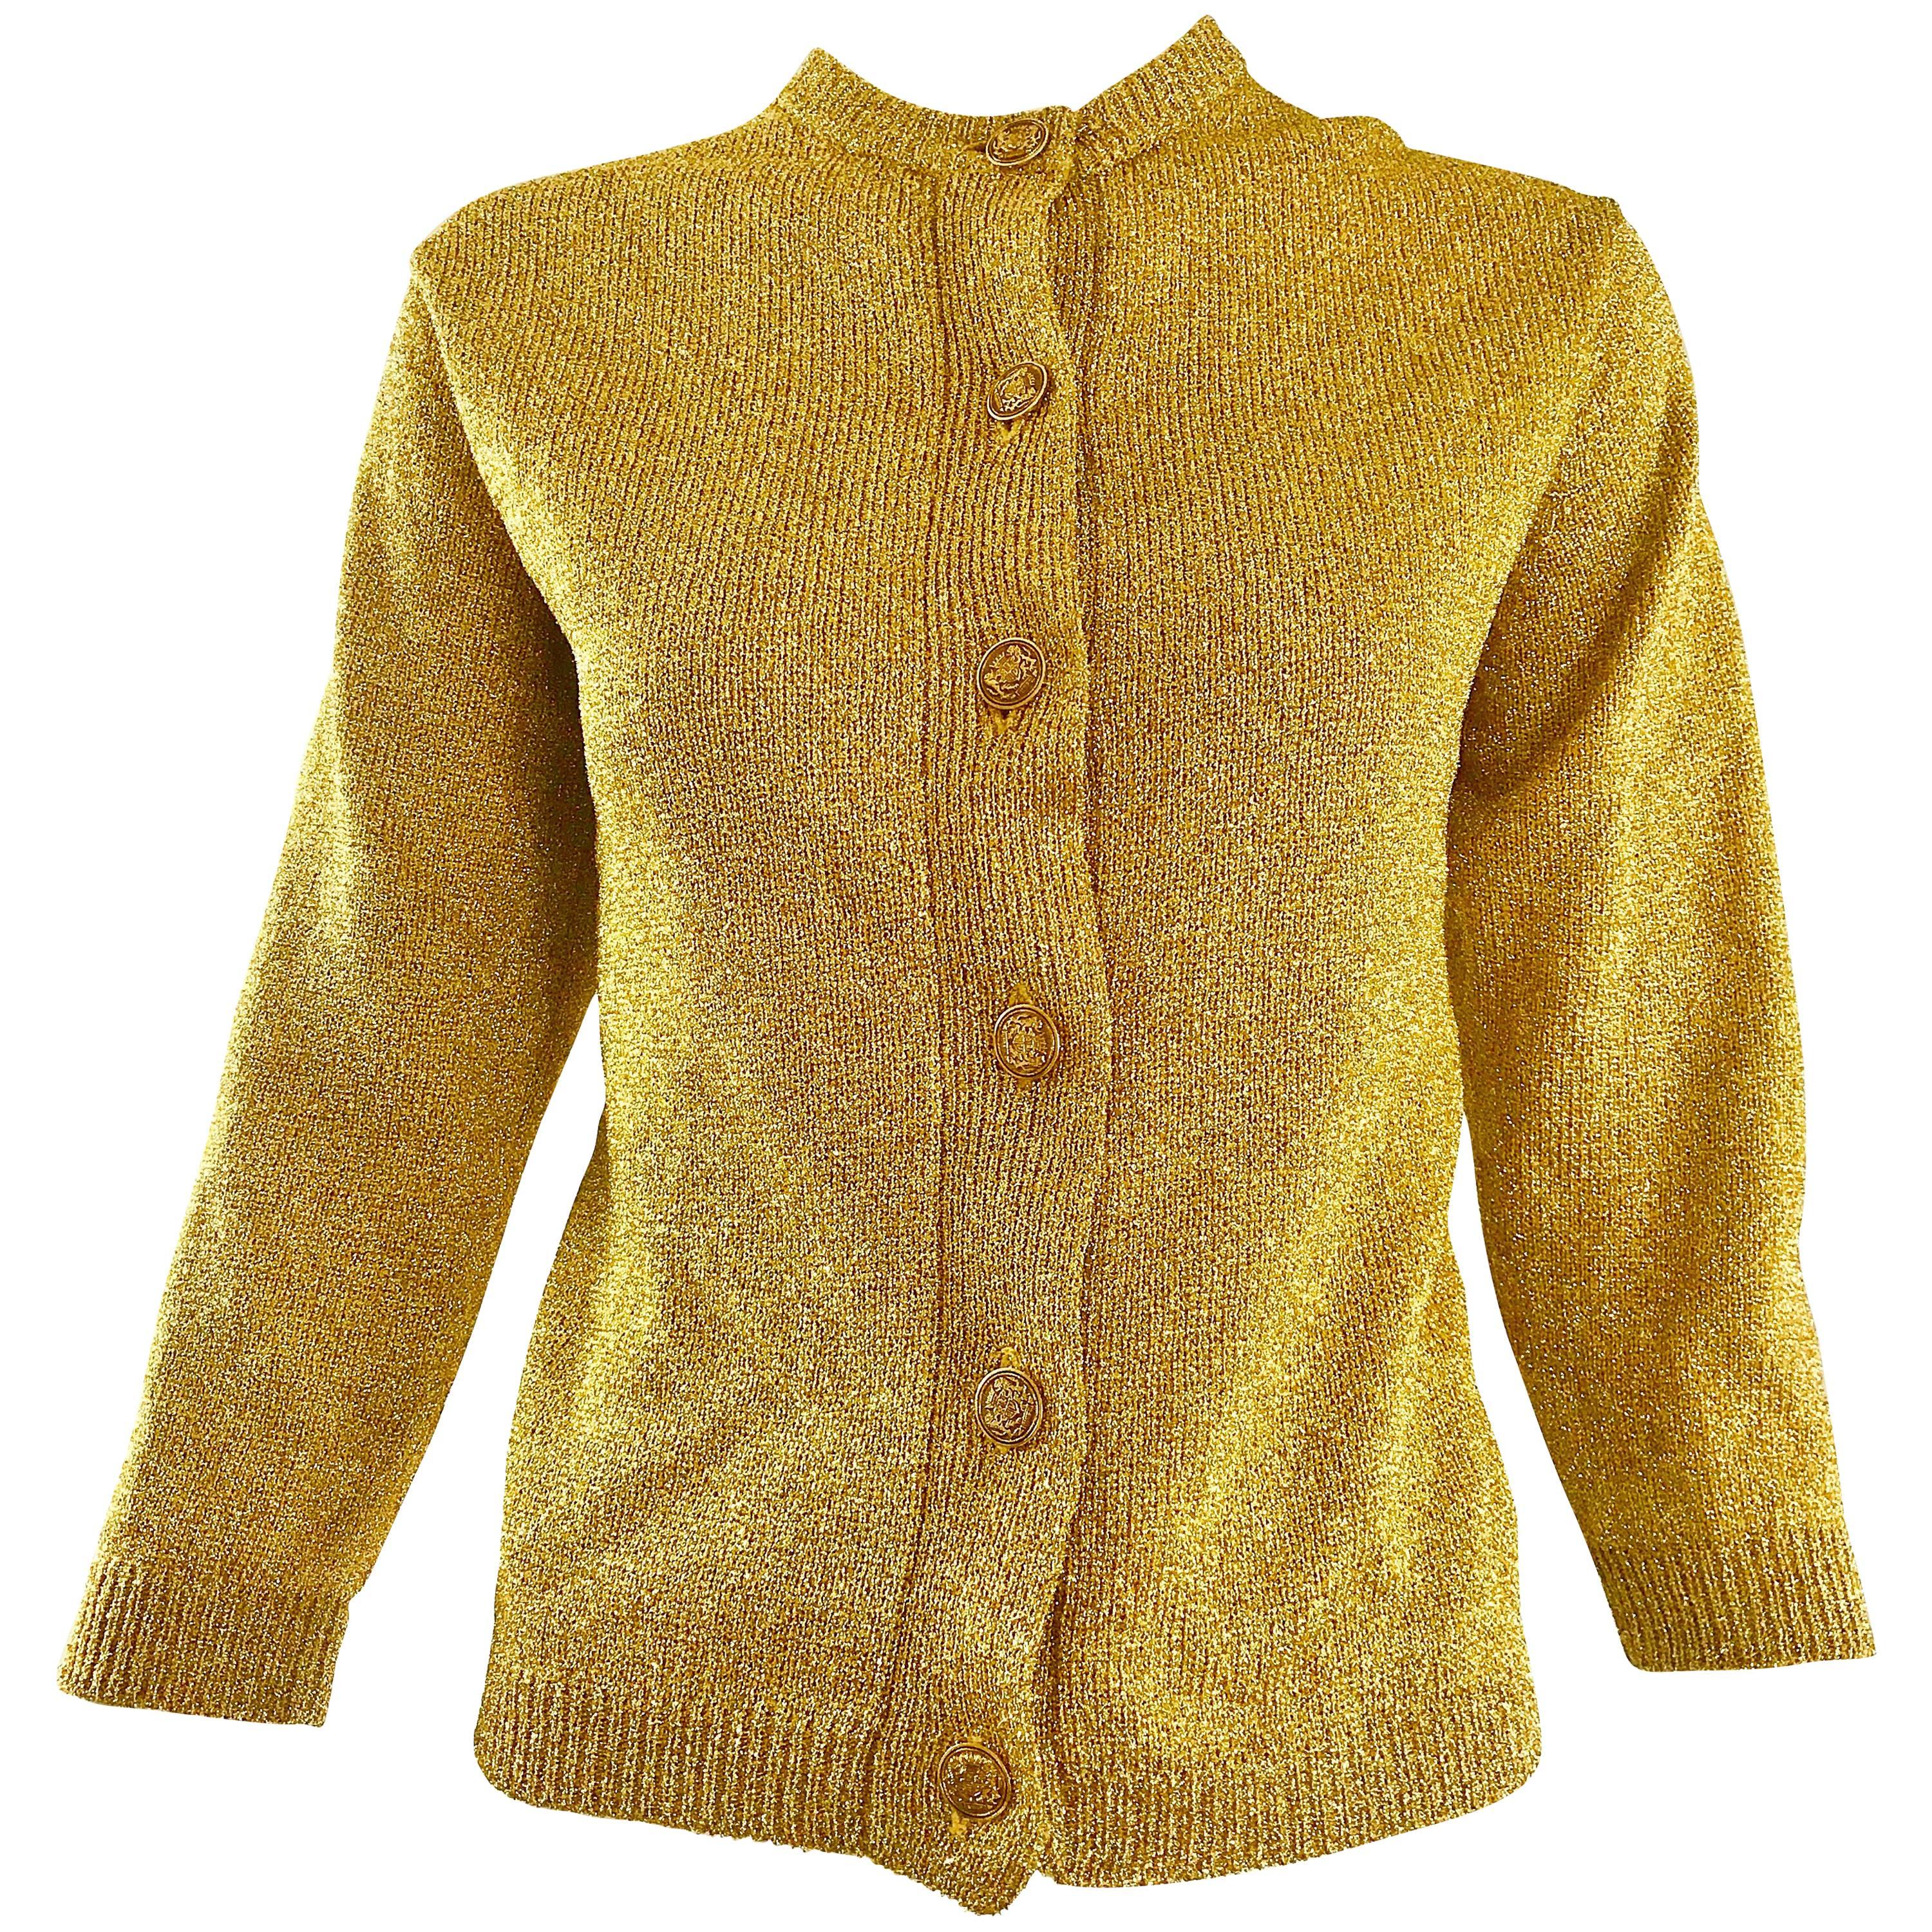 1950s Gold Metallic Lurex 3/4 Sleeves French Made Vintage 50s Cardigan Sweater